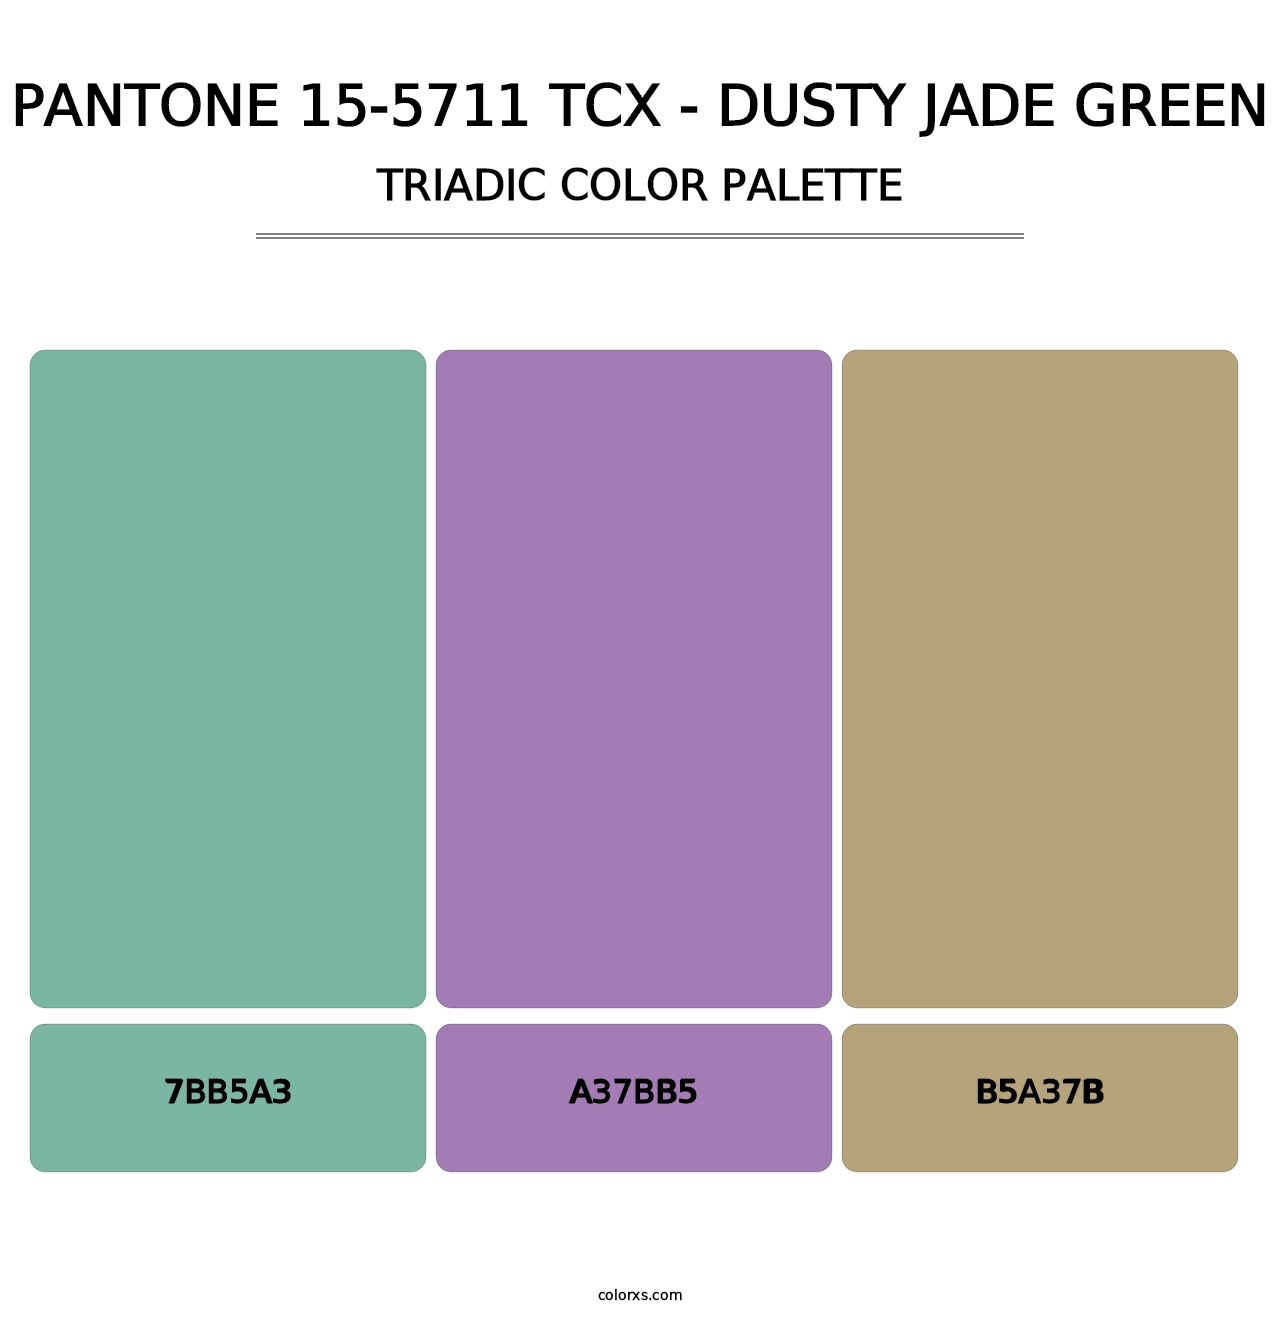 PANTONE 15-5711 TCX - Dusty Jade Green - Triadic Color Palette